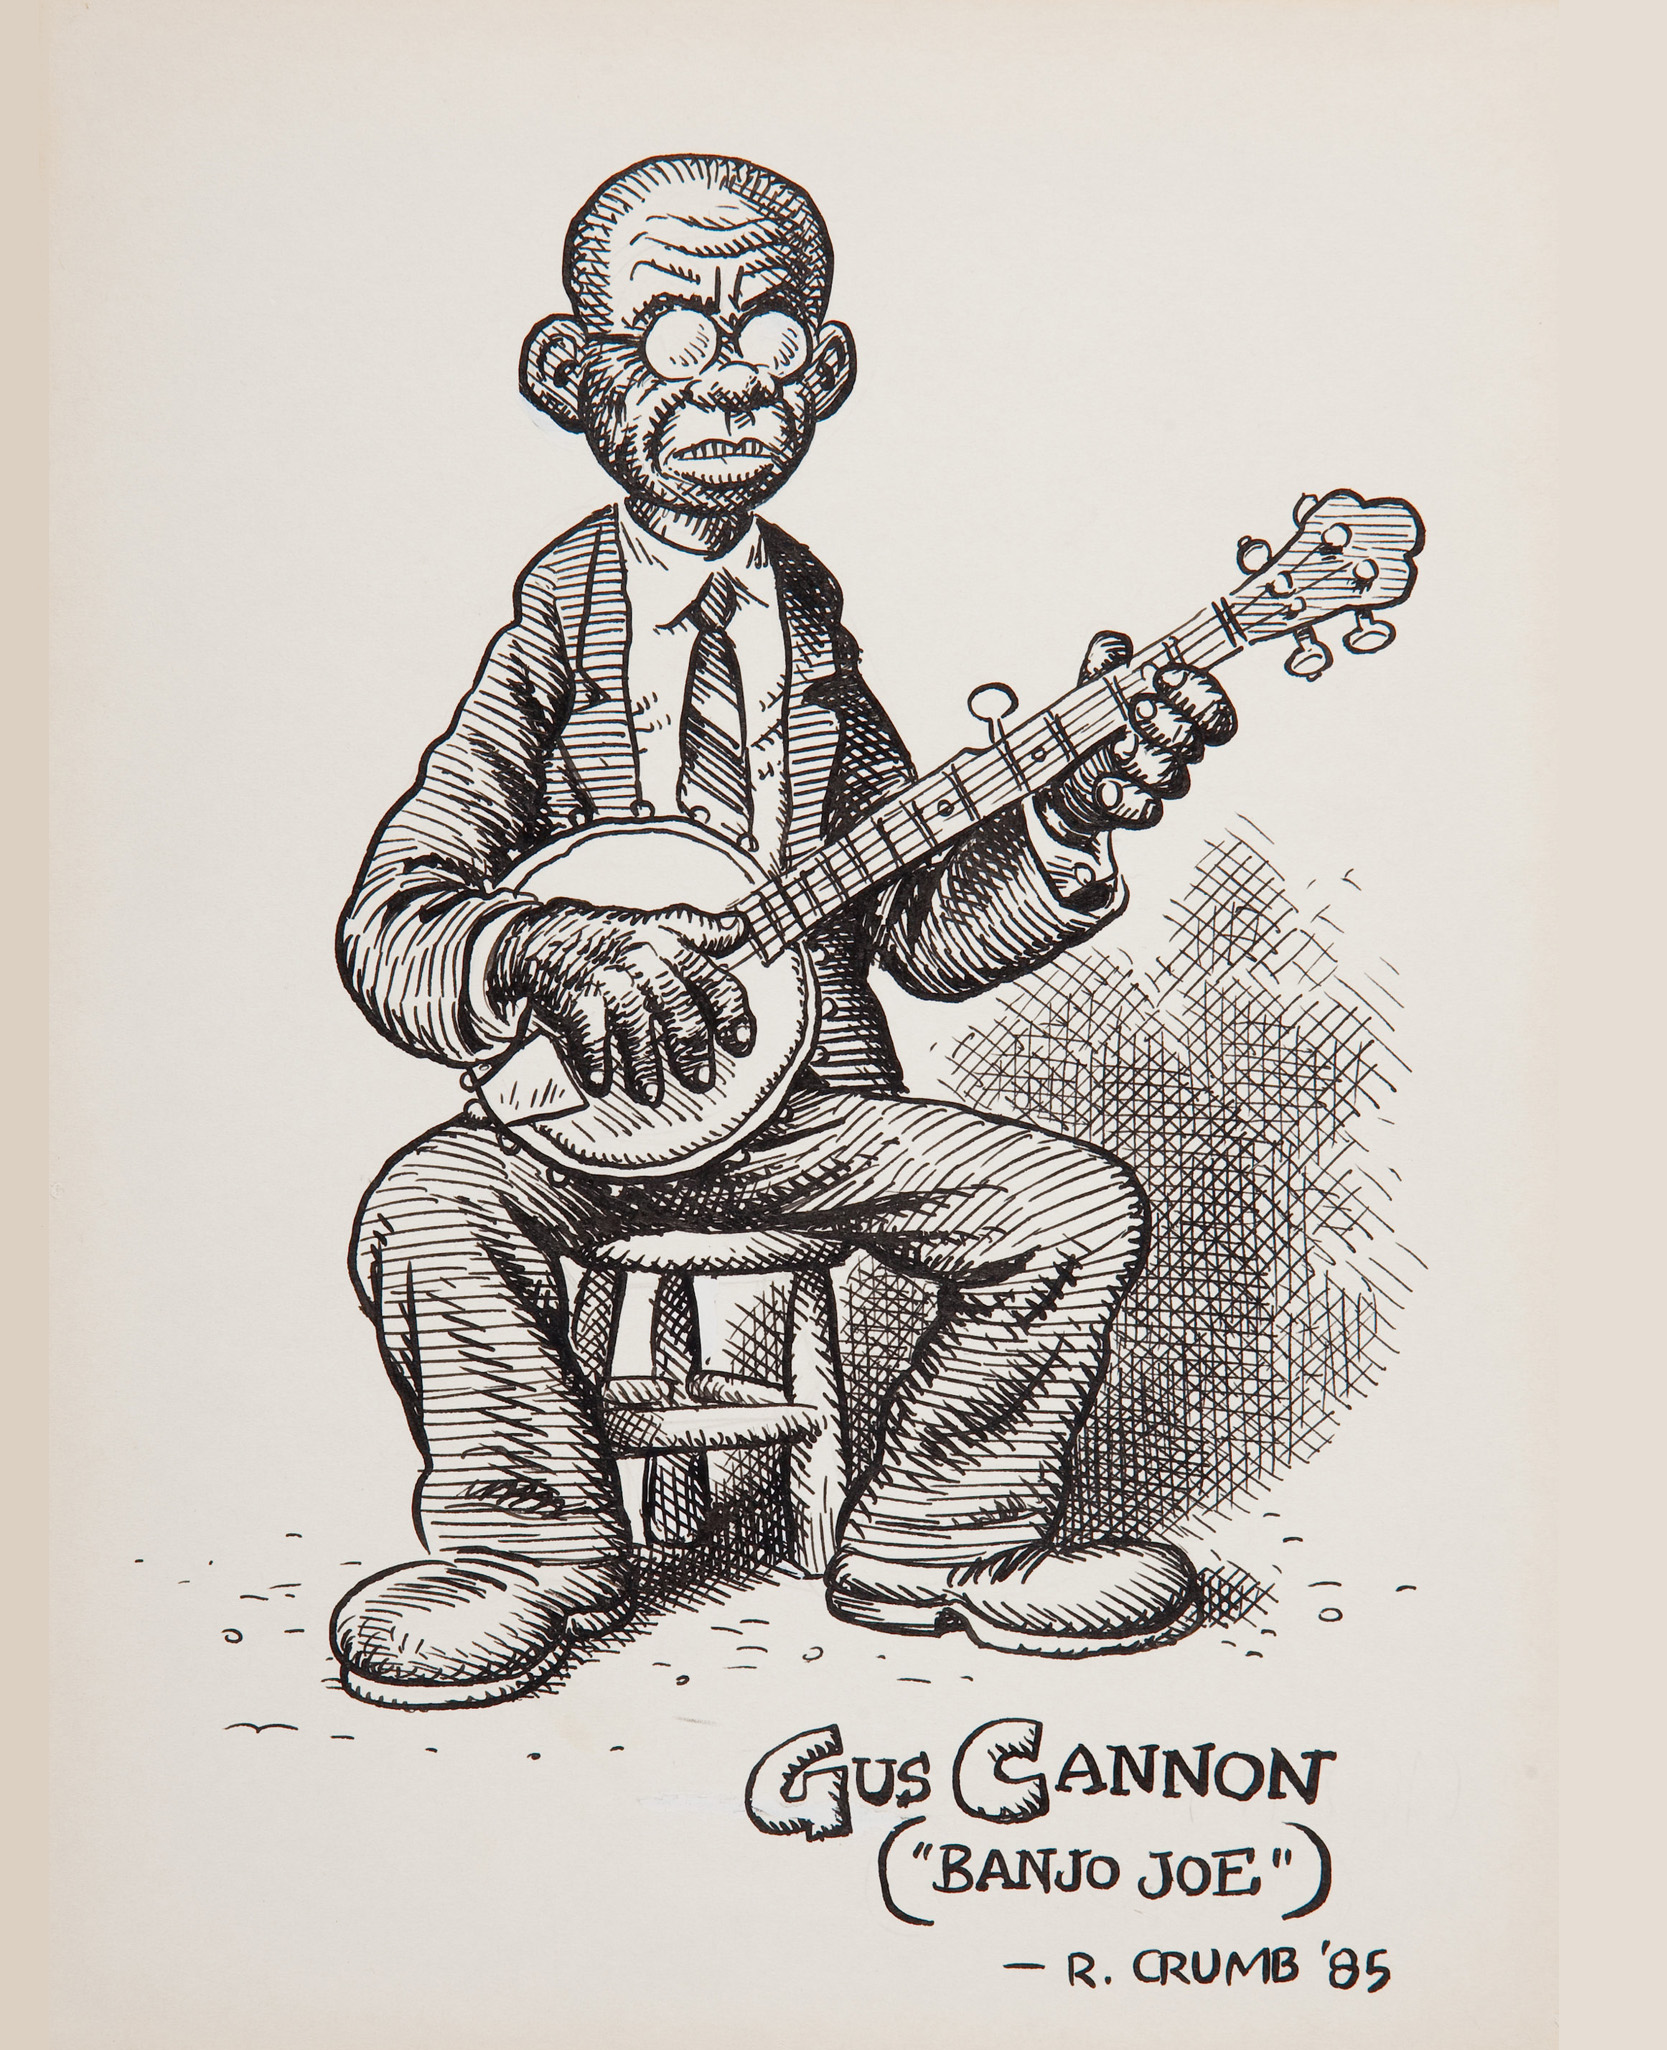 Gus Cannon, cartoon by R. Crumb, 1985